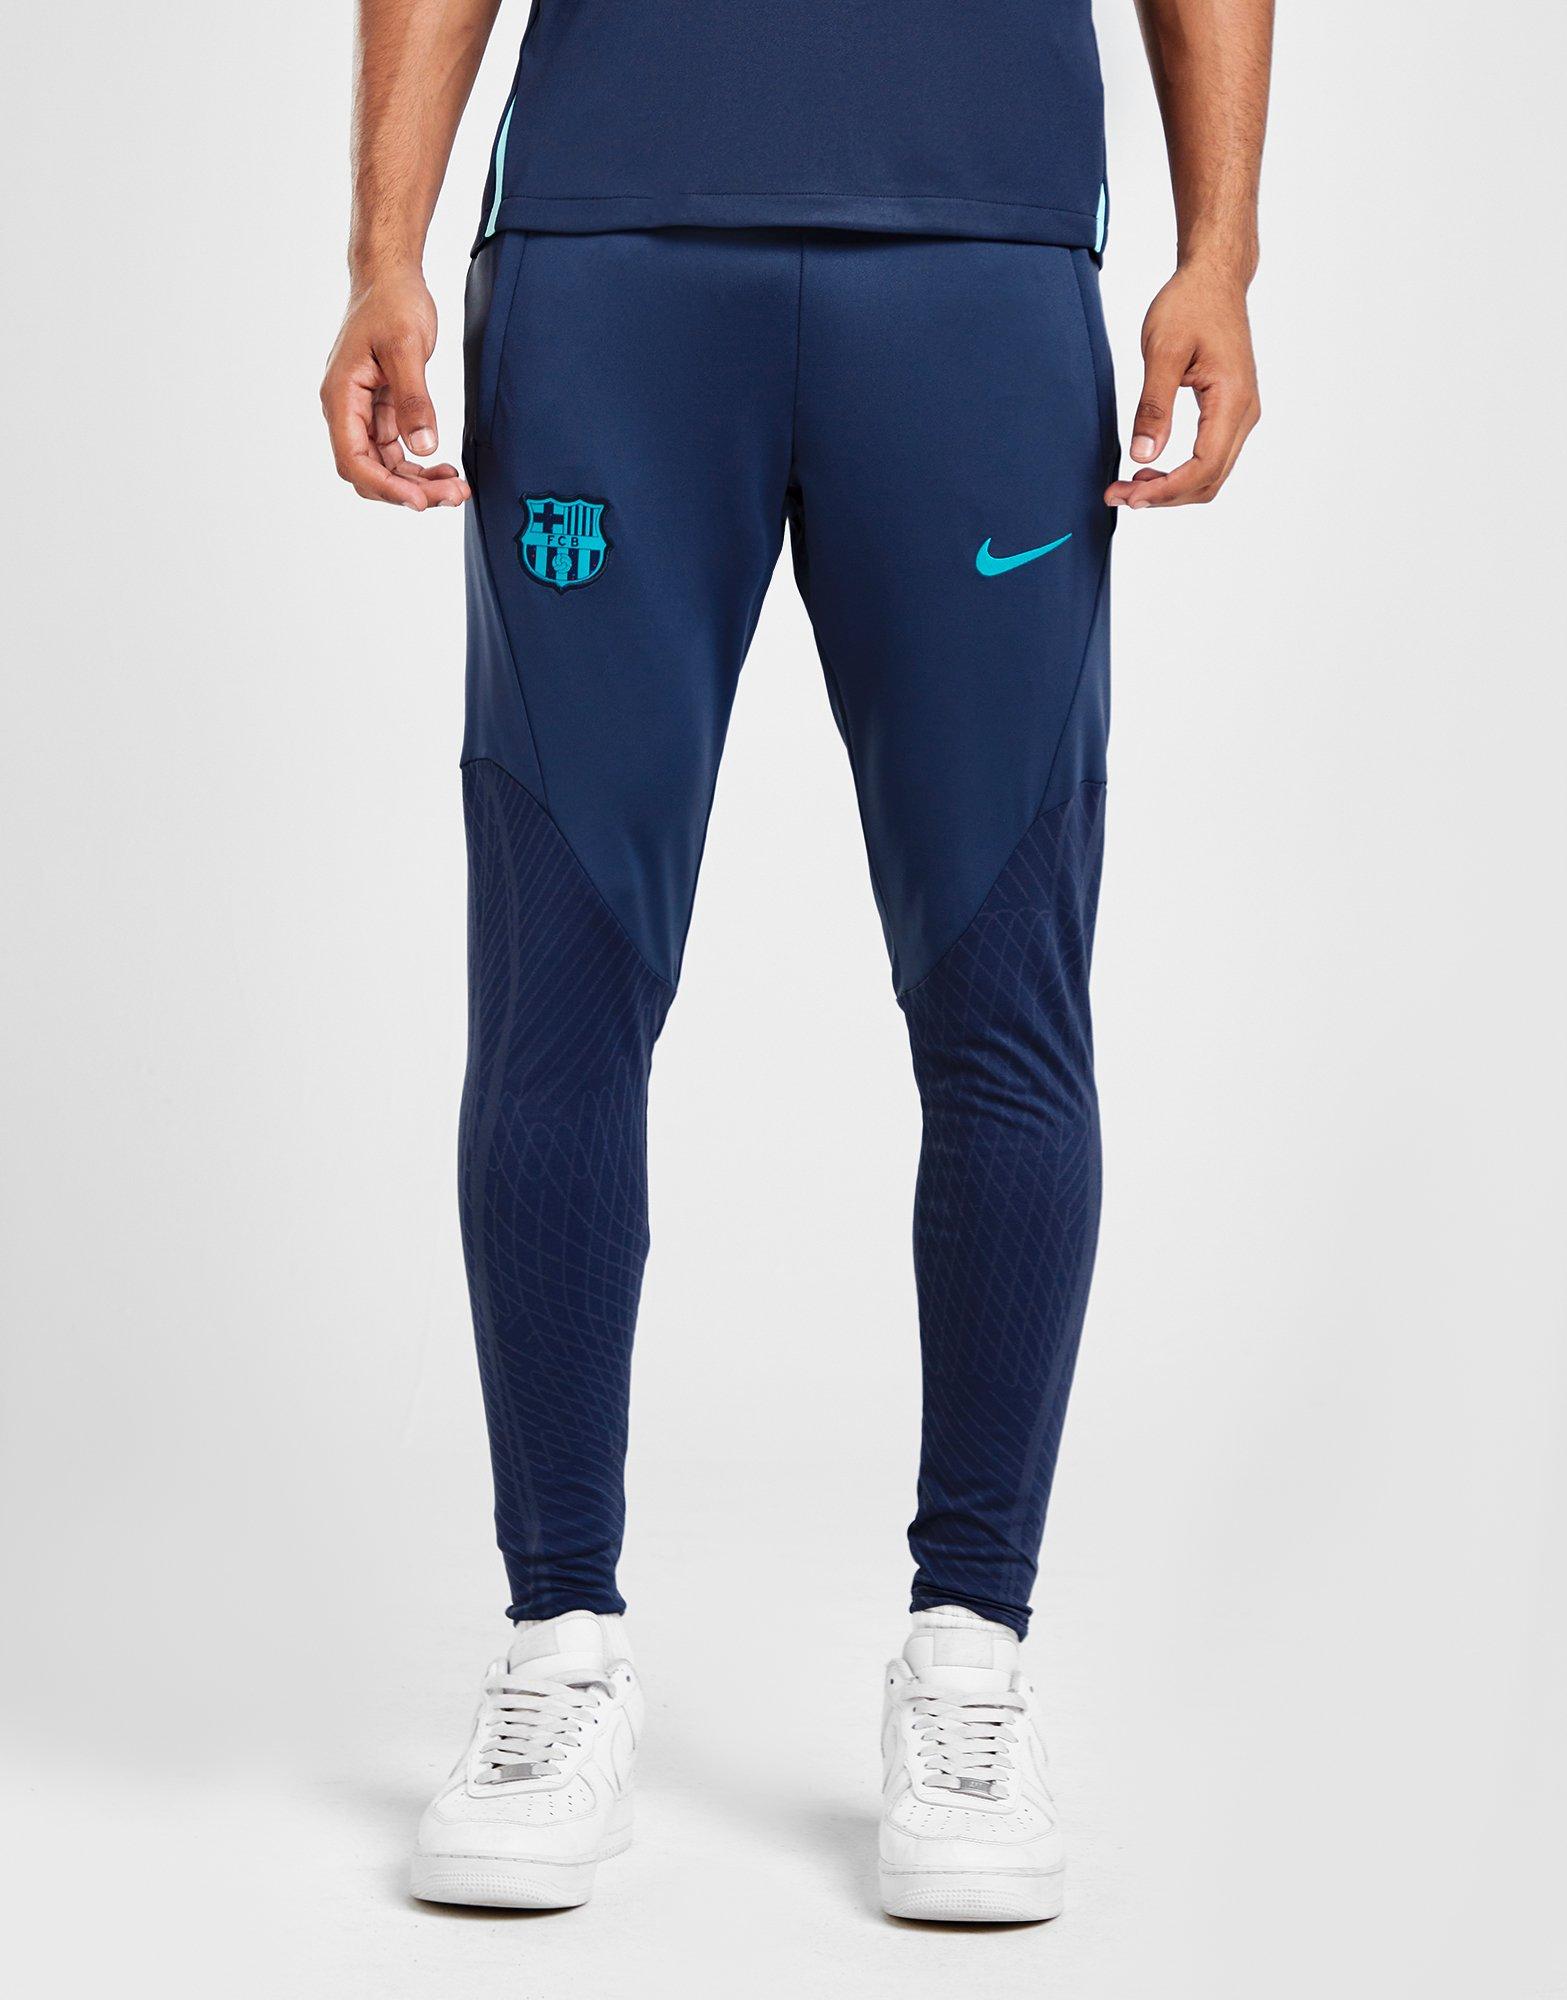 Nike Tracksuit Bottoms Track Pants Joggers Vintage Sweatpants 00s